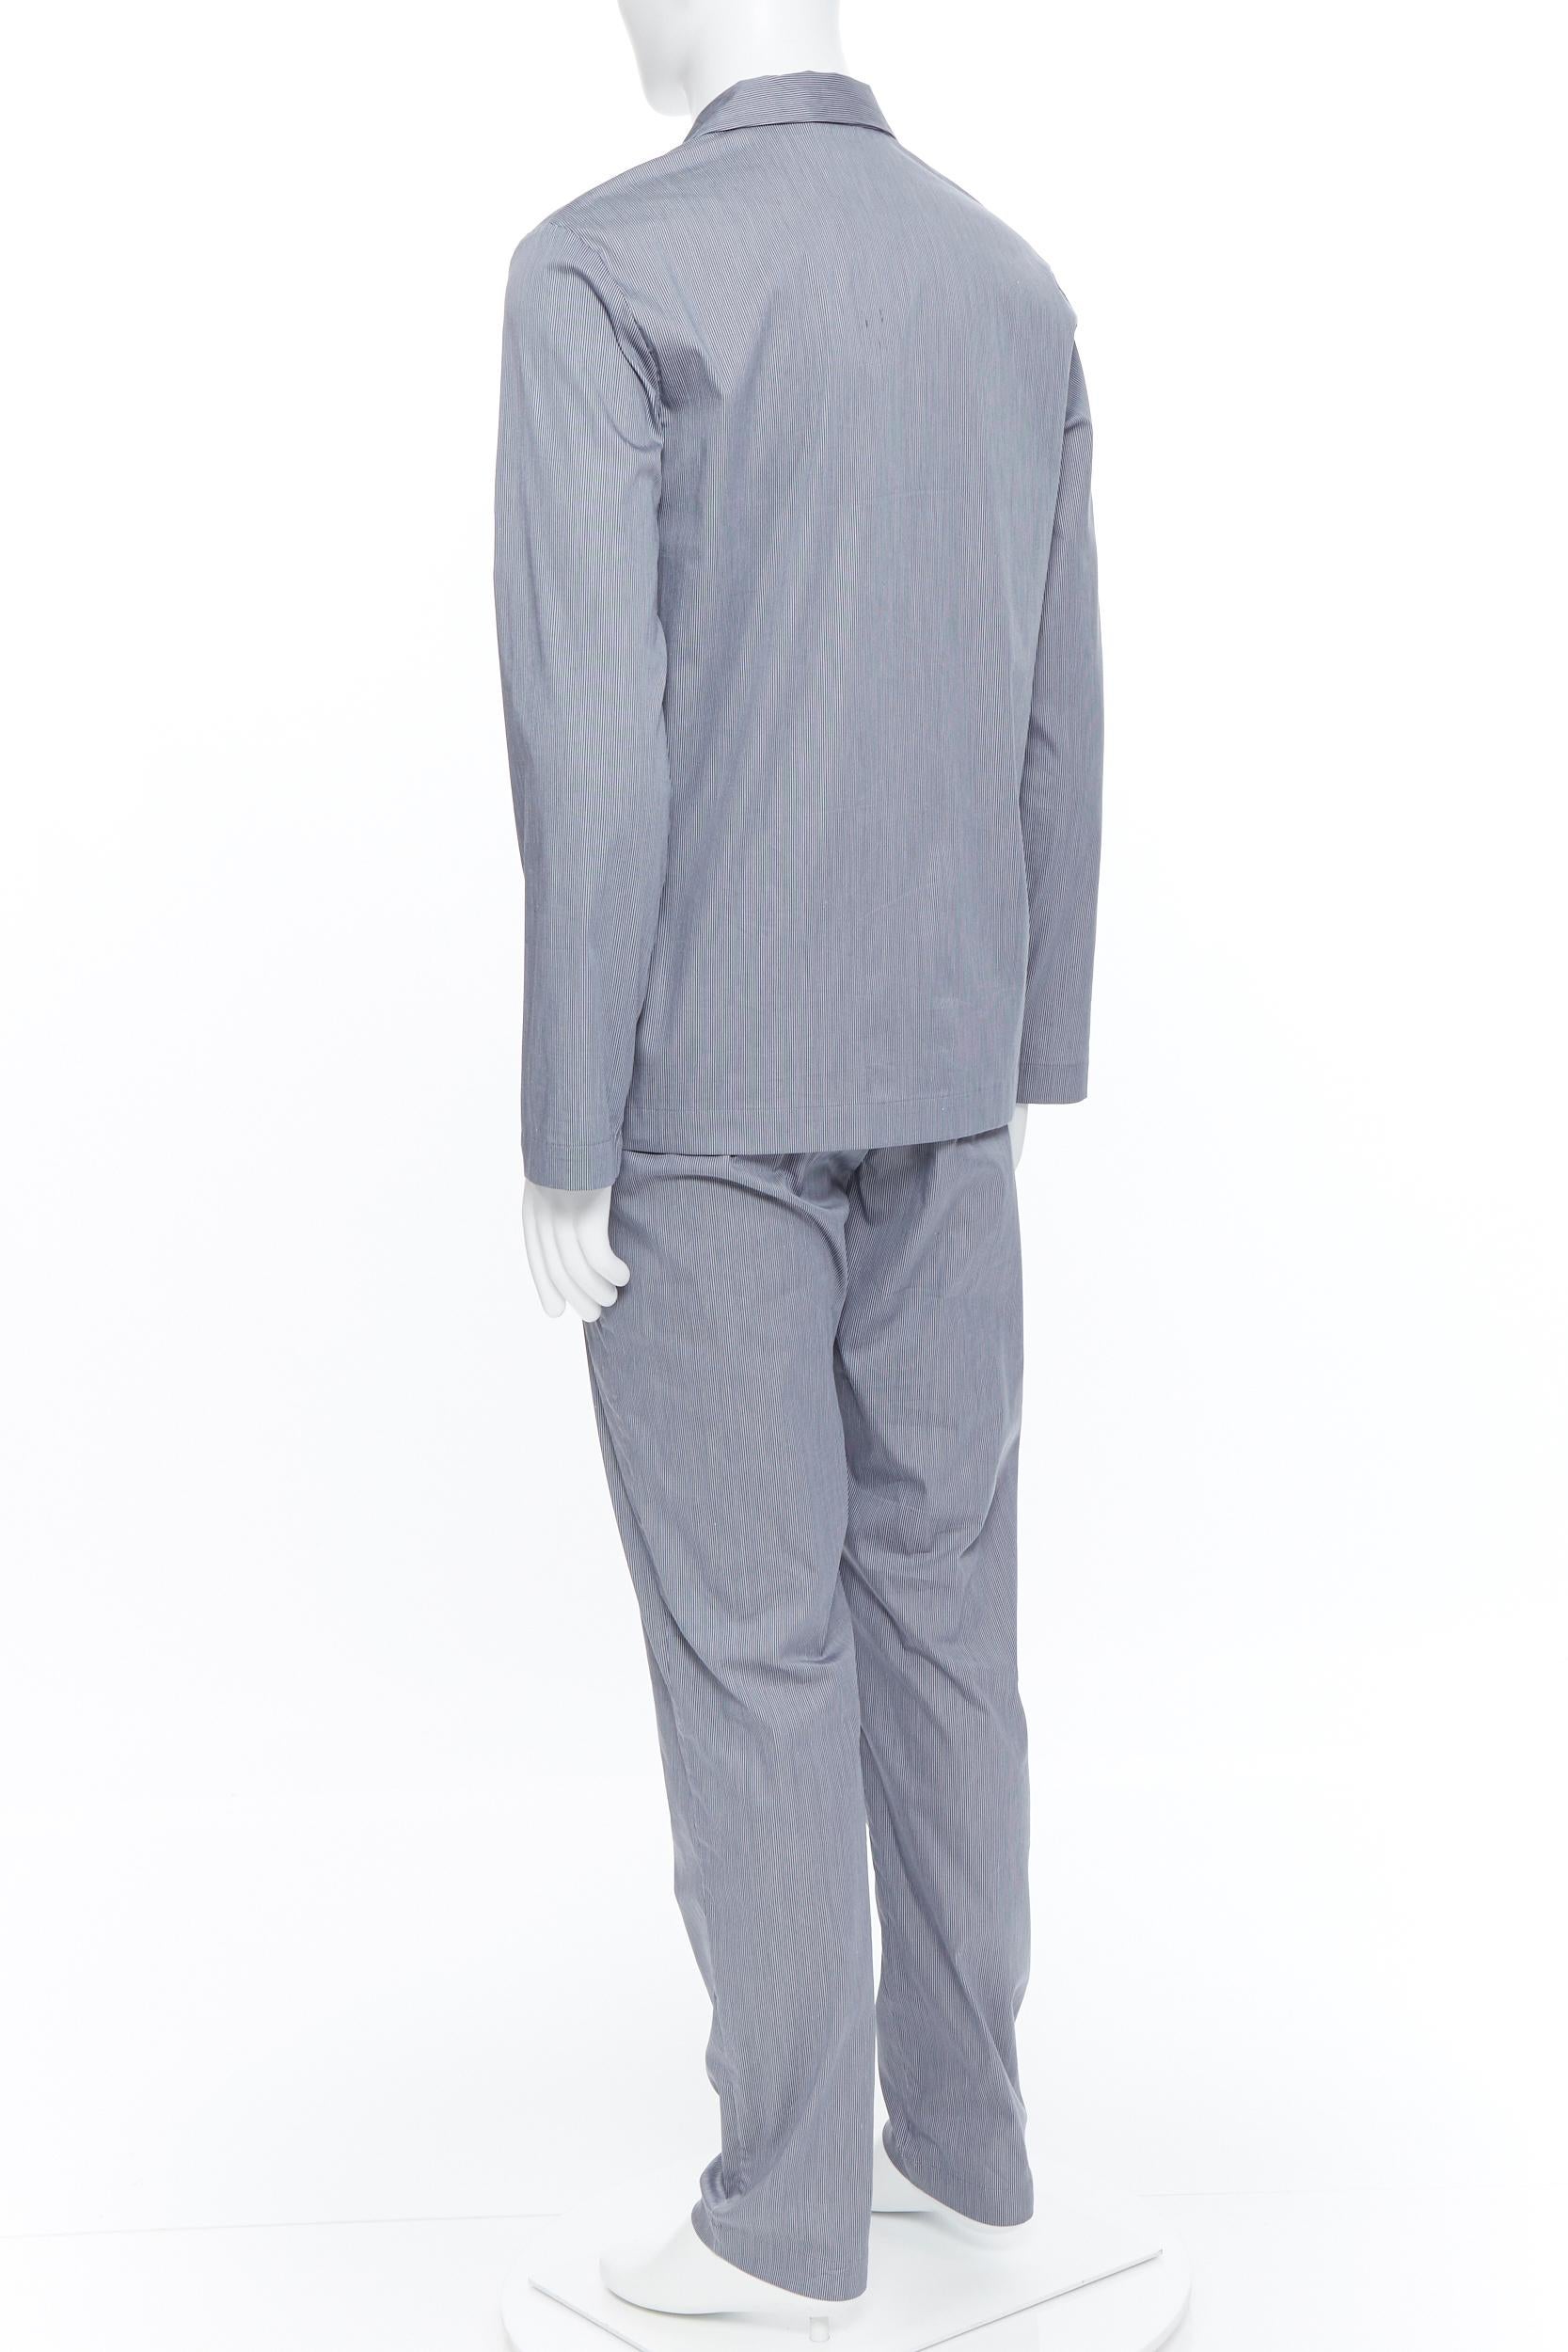 new LA PERLA grey stripe cotton blend notched collar pyjama set pants M 1